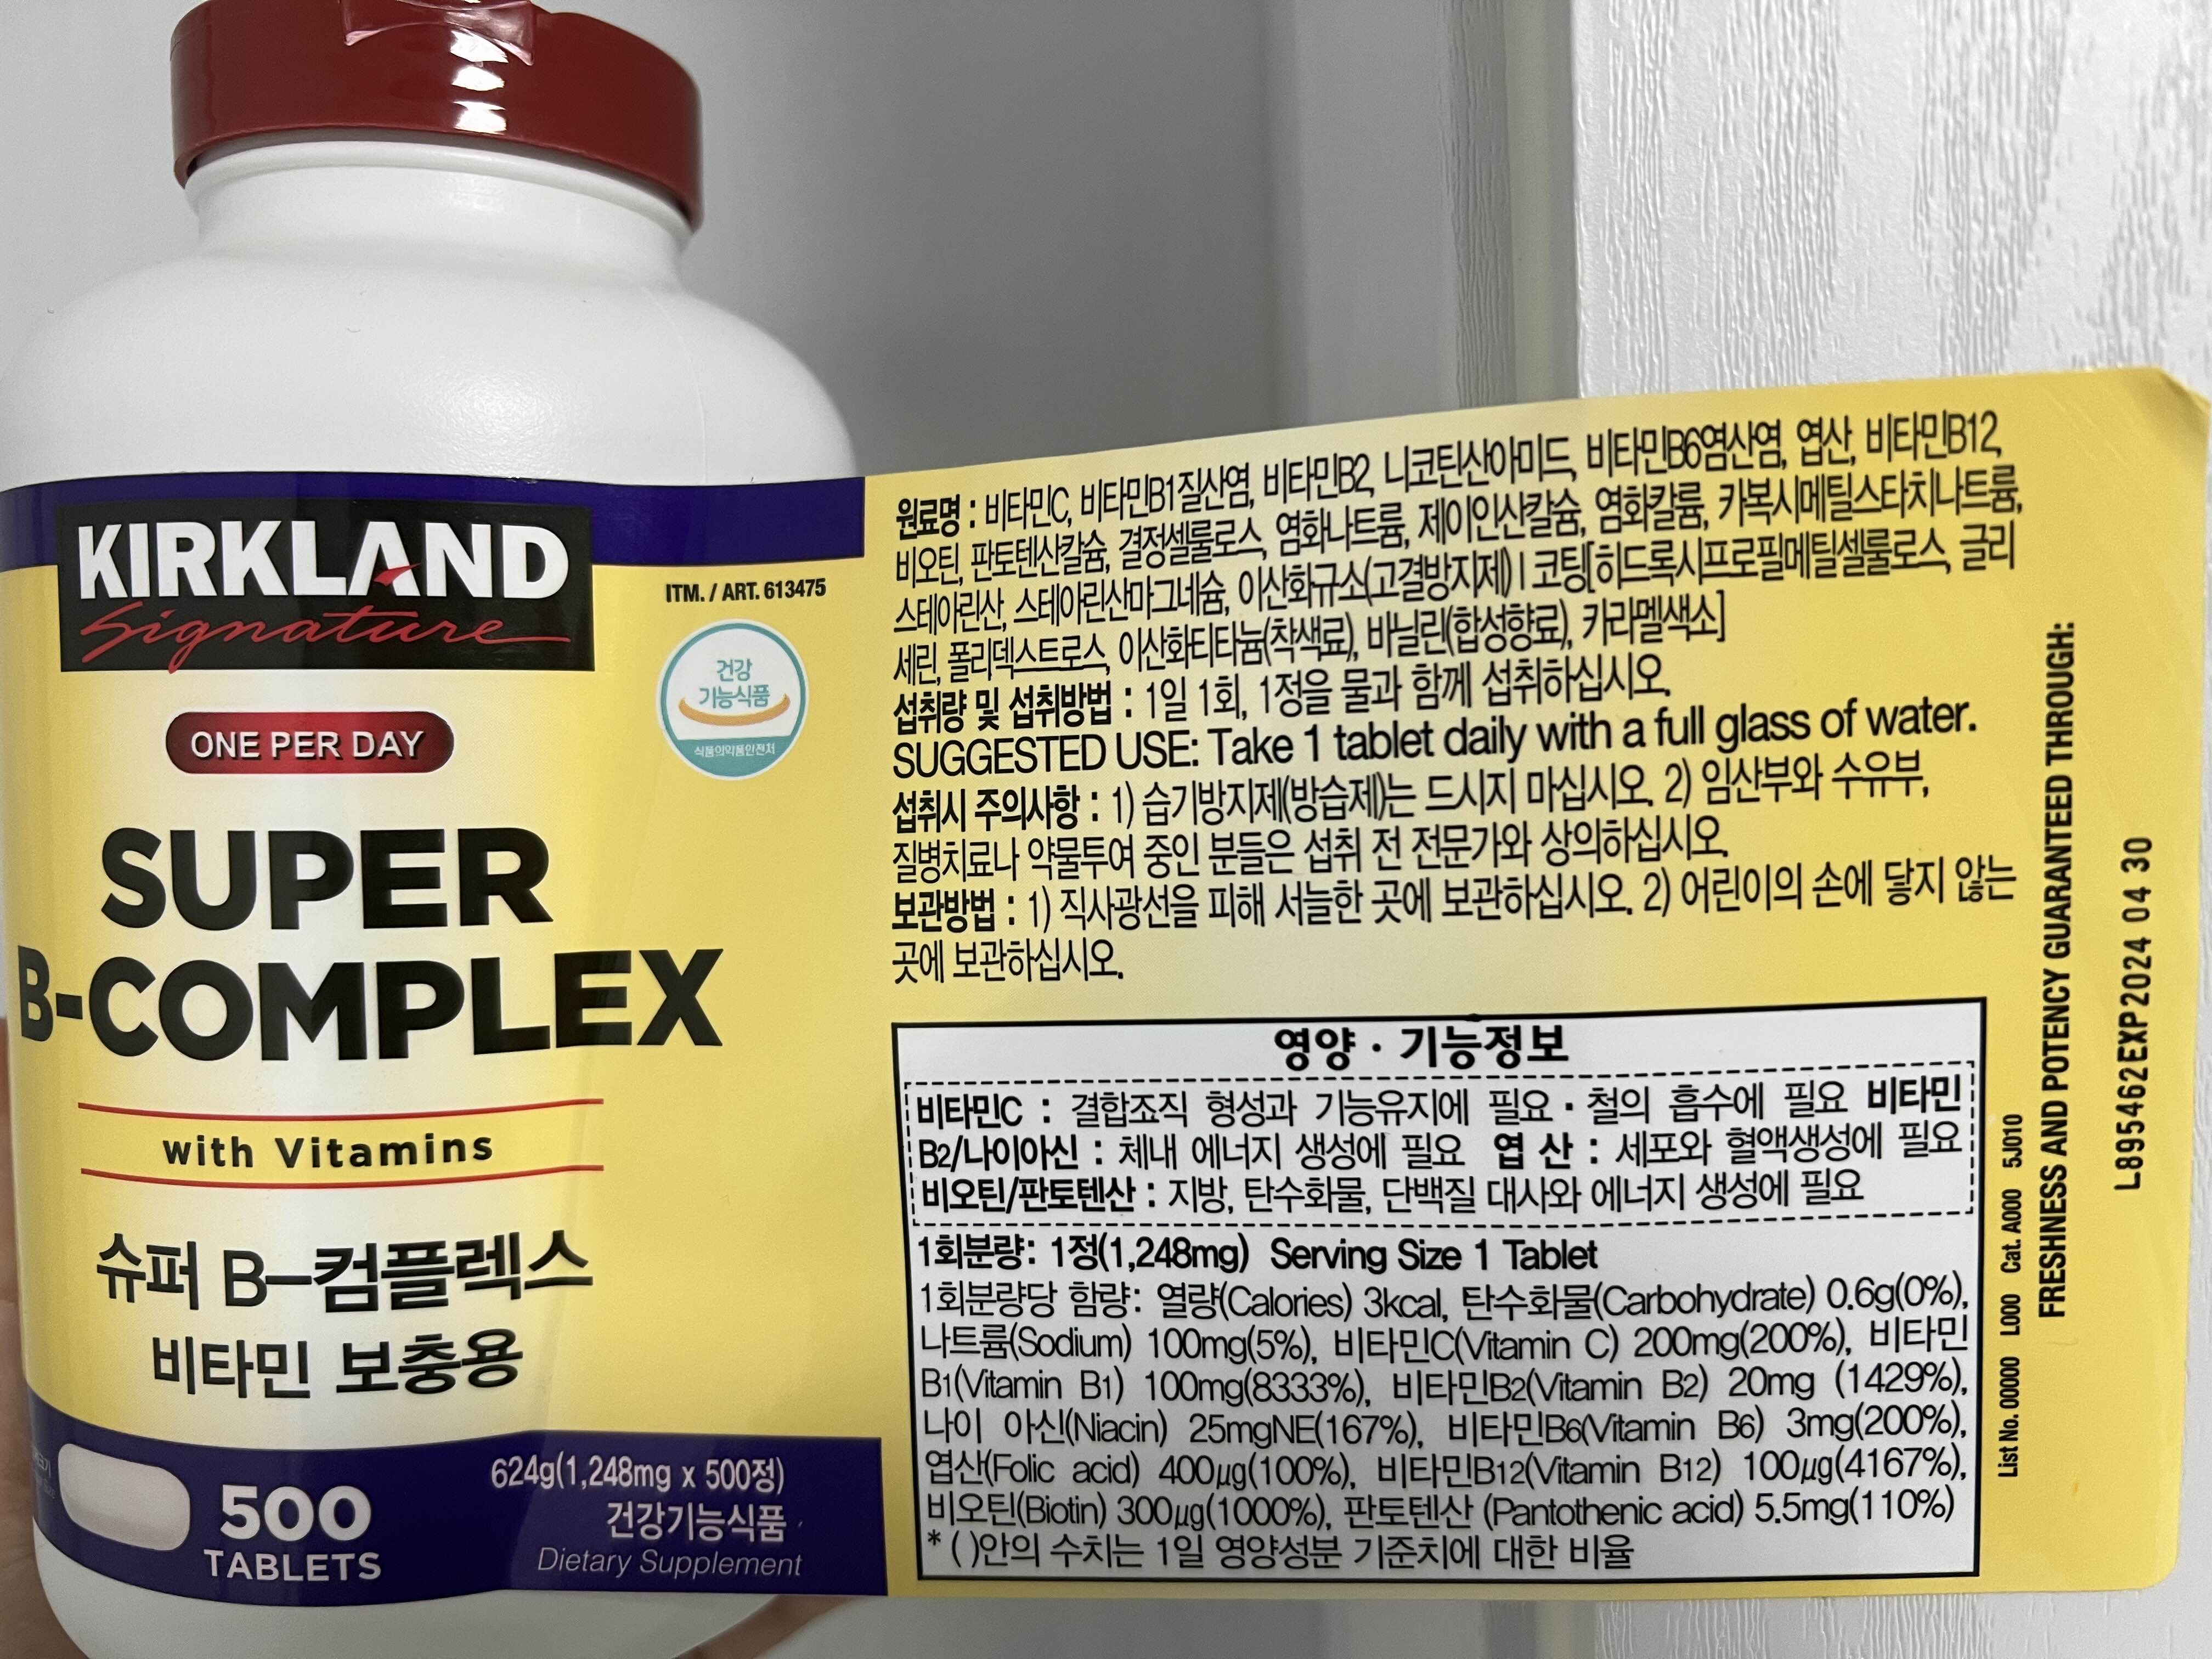 KIRKLAND SUPER B-COMPLEX 영양 기능정보